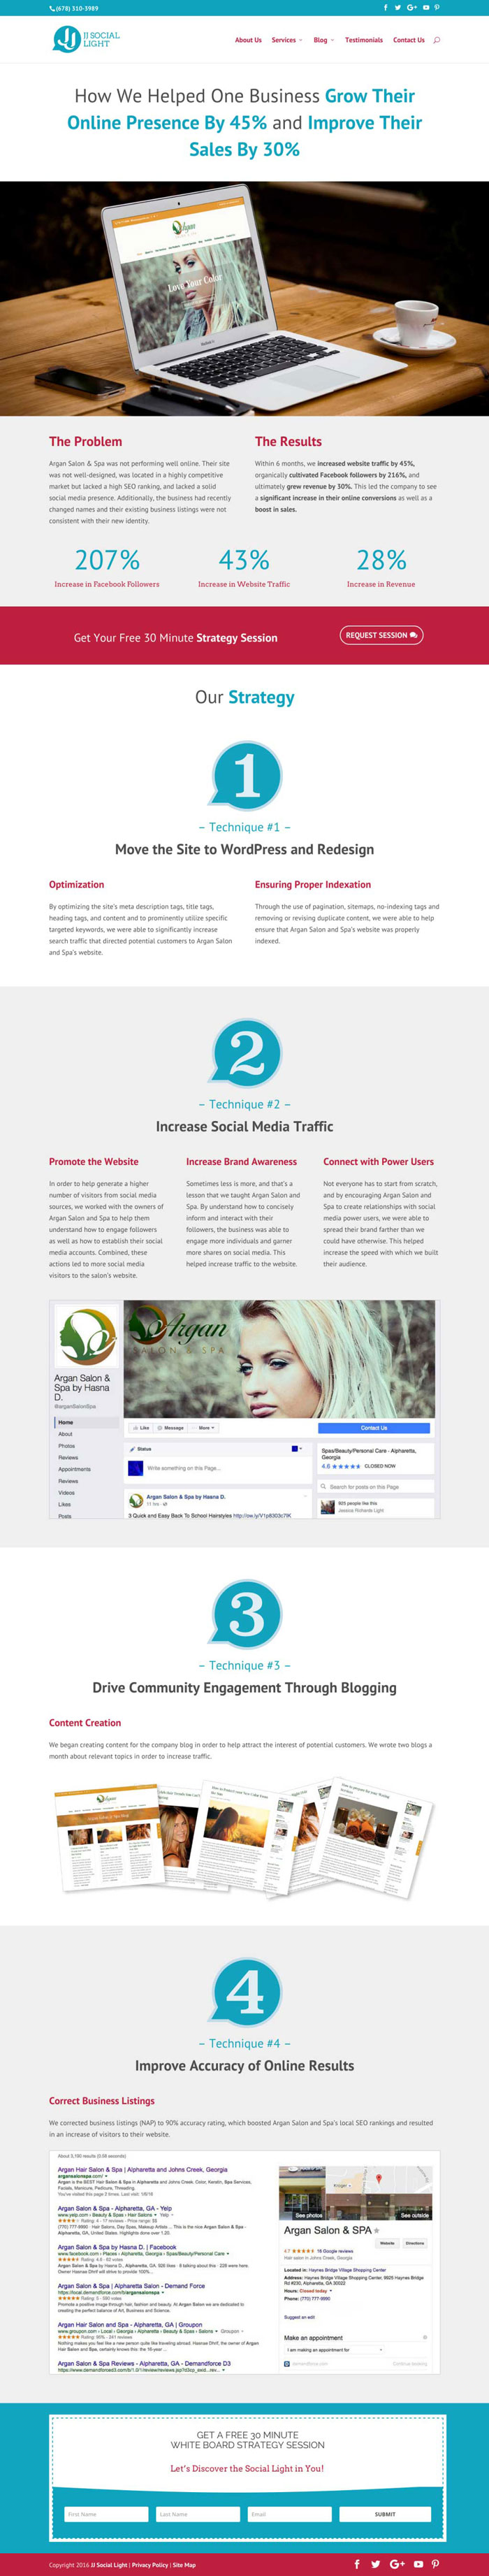 JJ Social Light Landing Page - Online Marketing Client Case Study